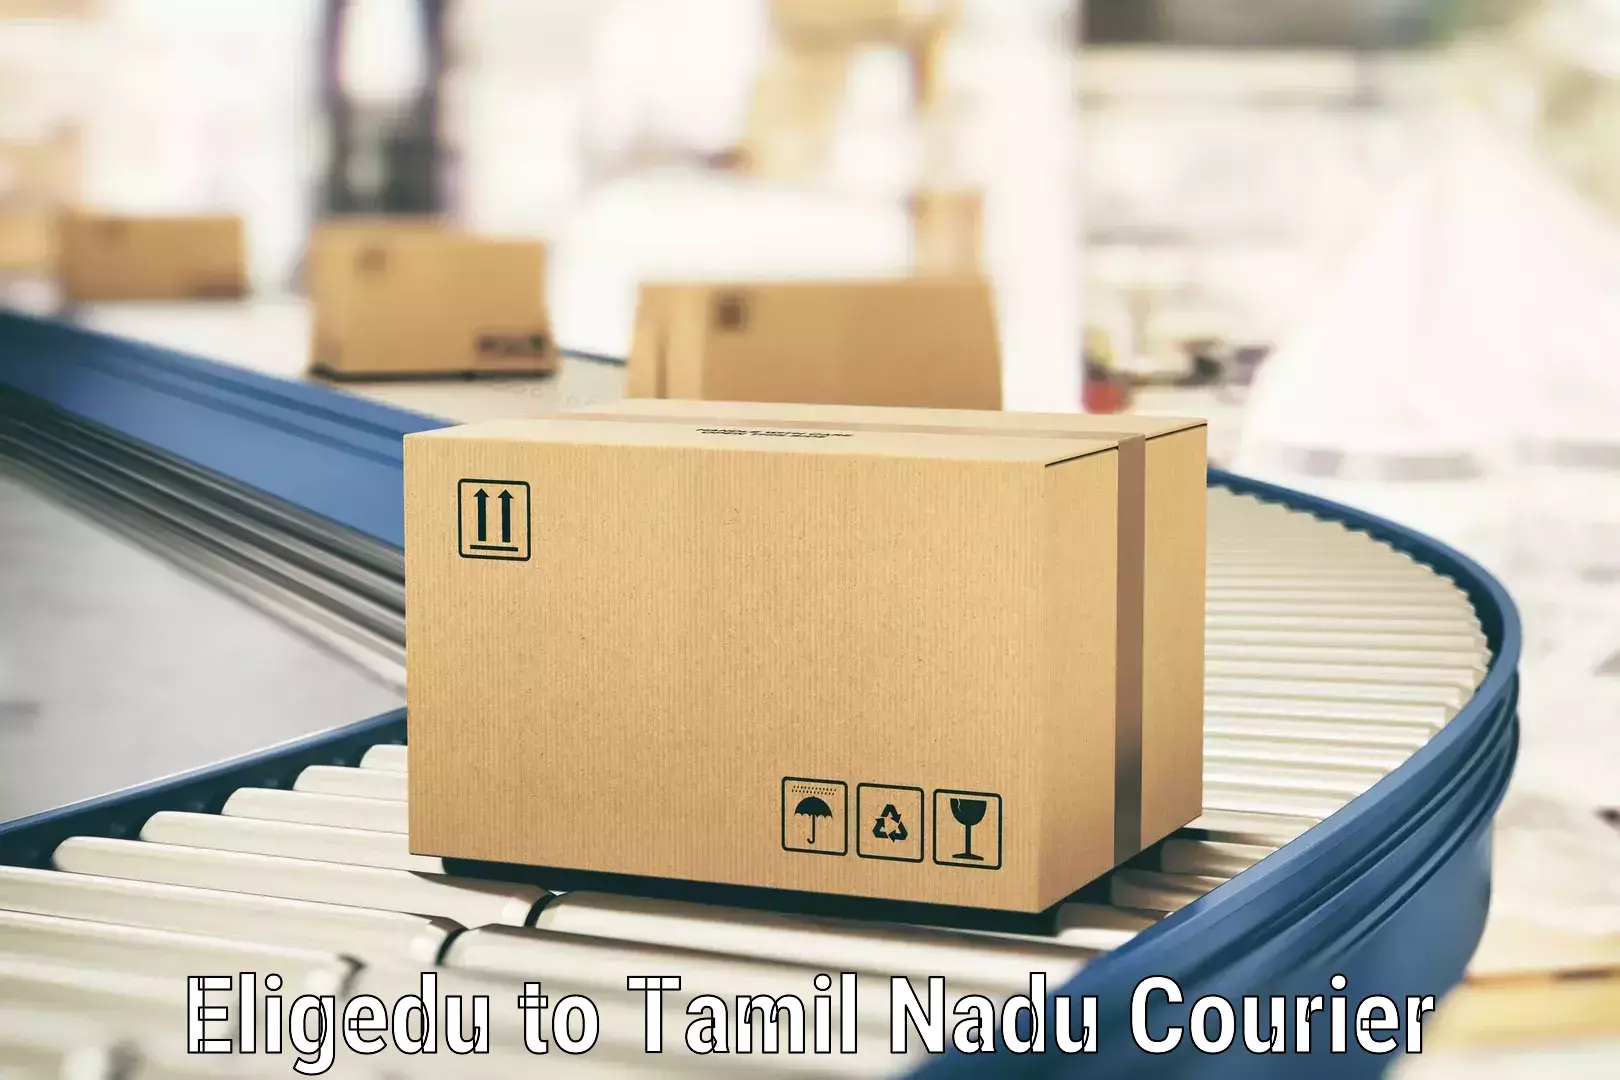 Courier tracking online Eligedu to Tamil Nadu